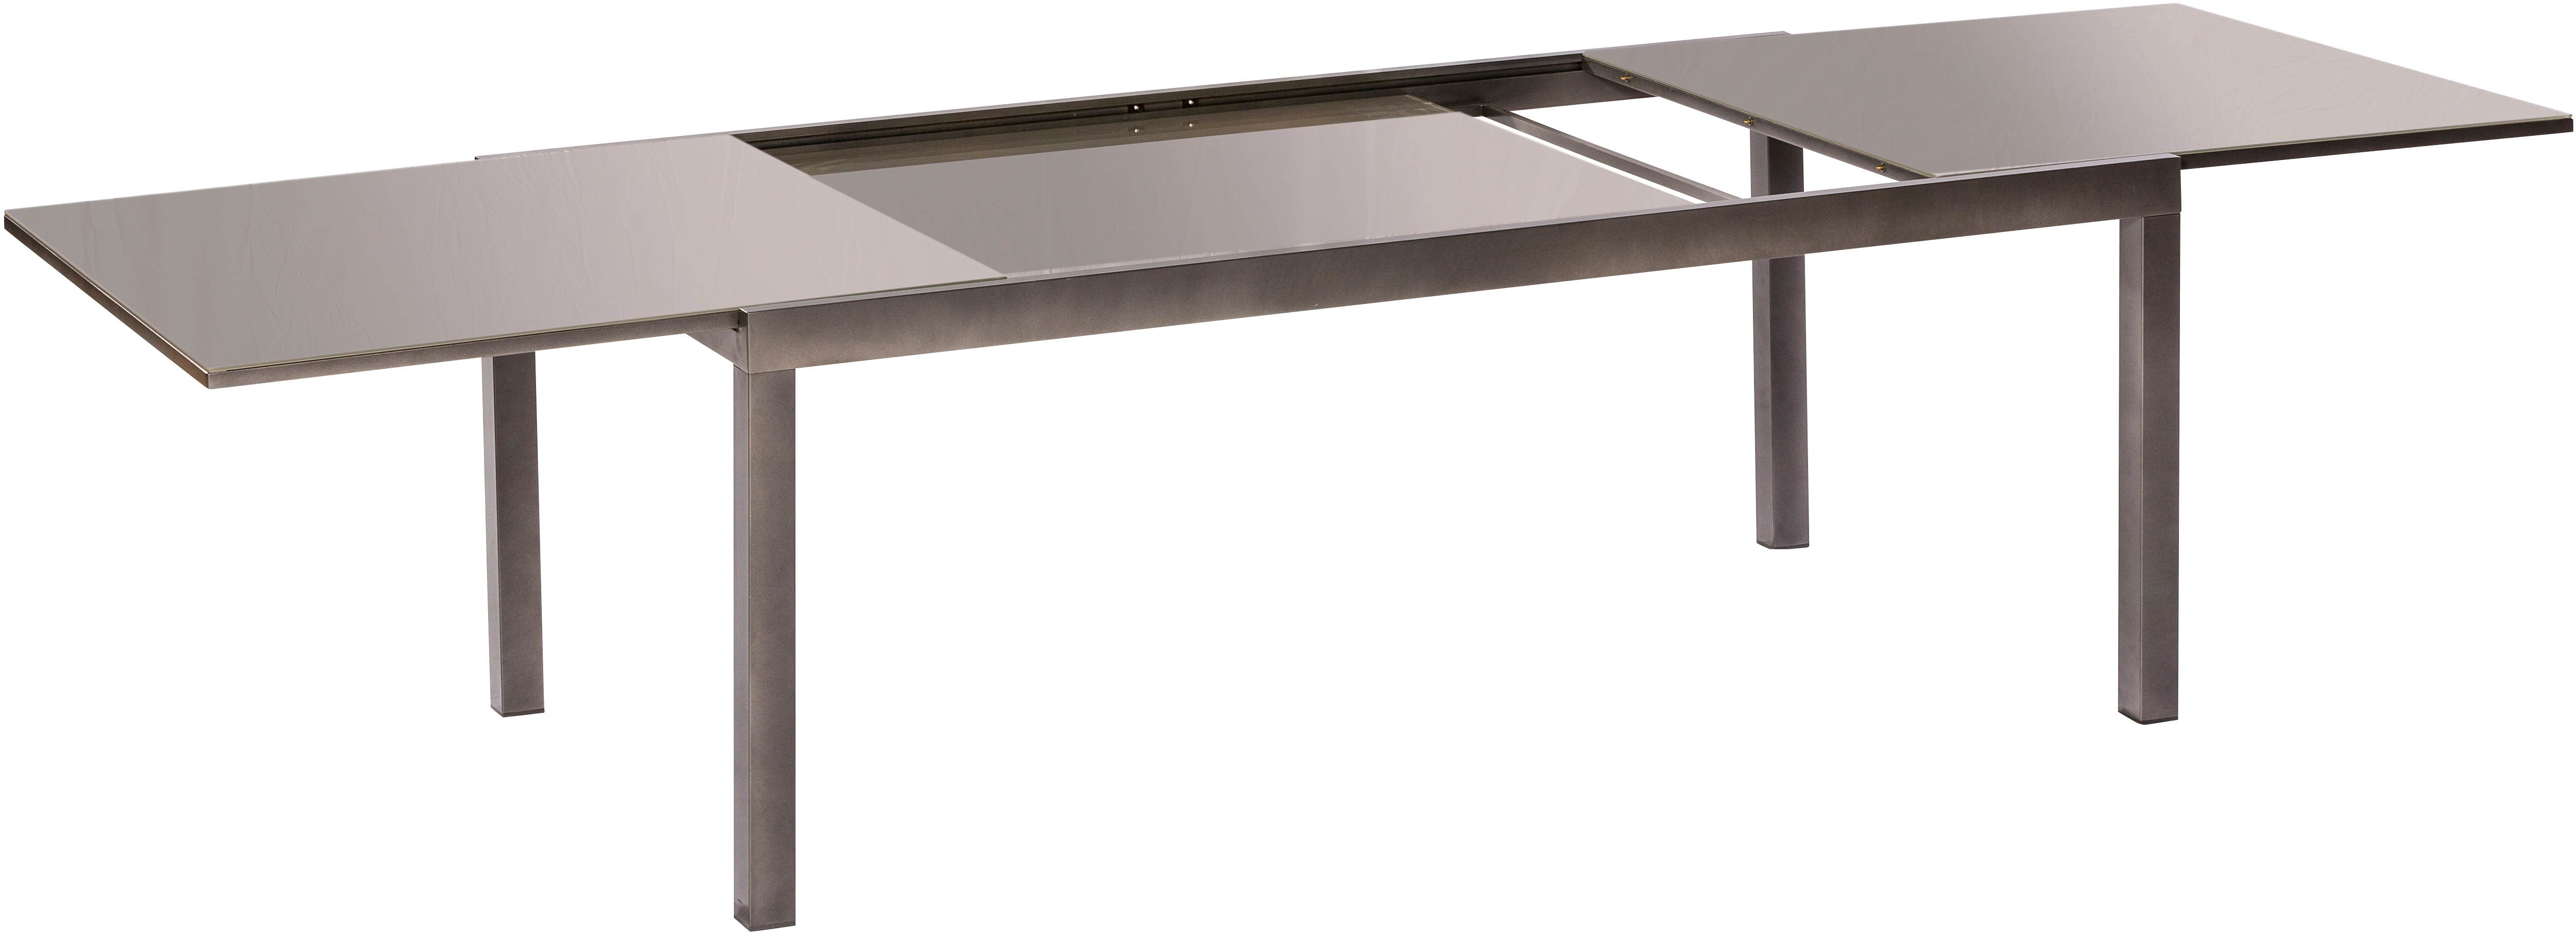 Merxx Gartentisch Semi Rechteckig Grau 110 cm cm bei Aluminium 200/300 x Ausziehbar kaufen OBI